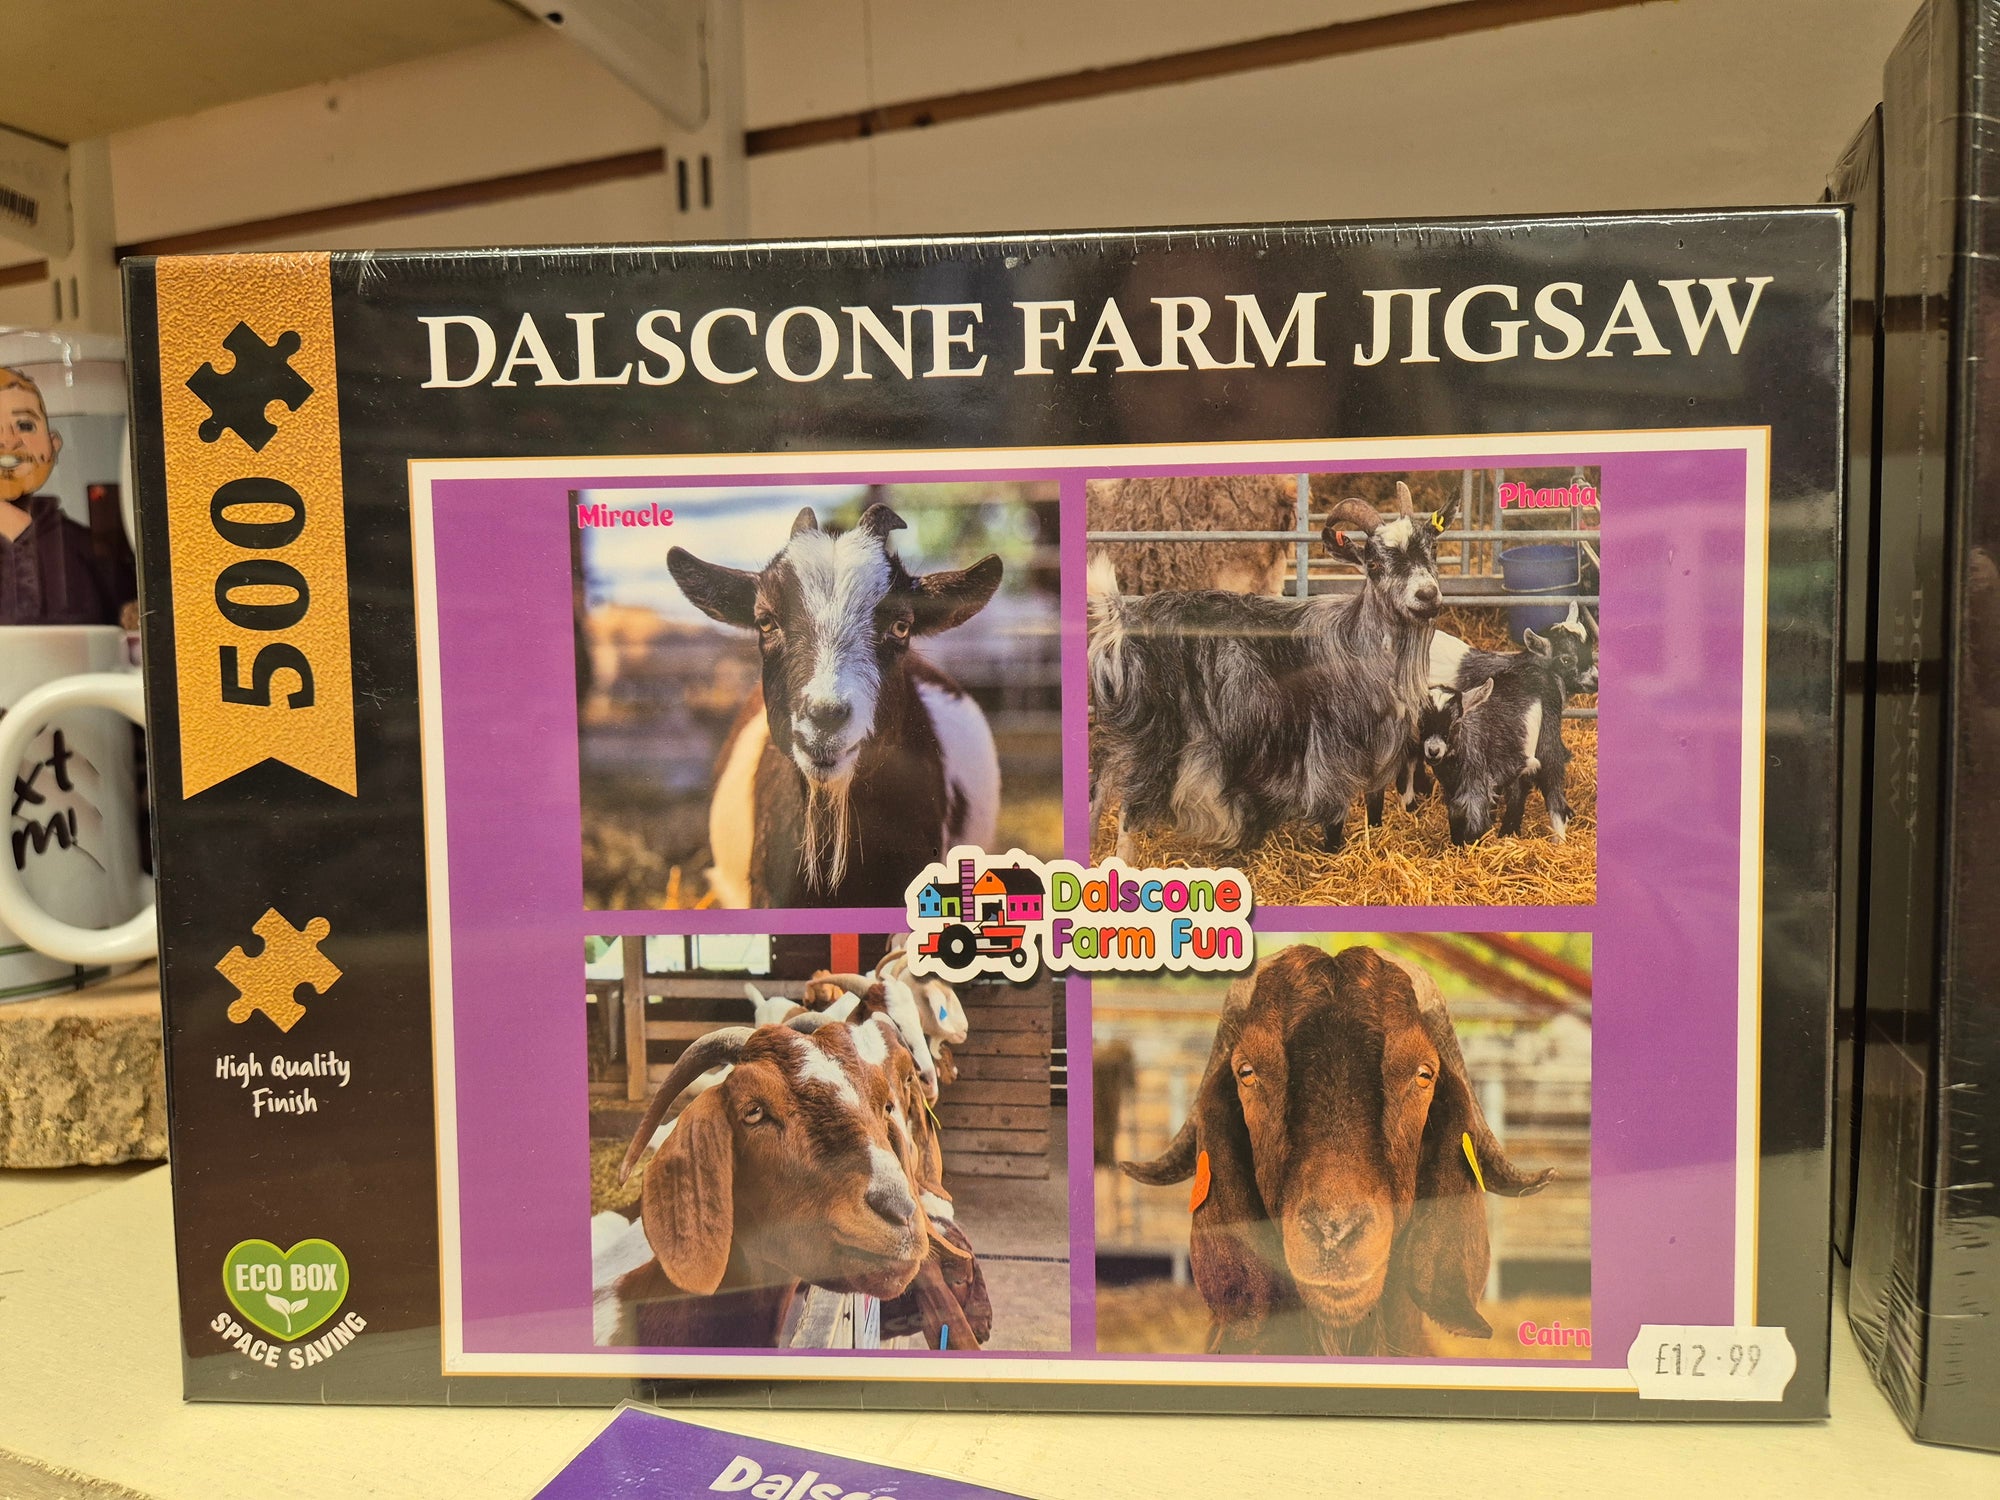 Dalscone Farm Jigsaw - 500 piece